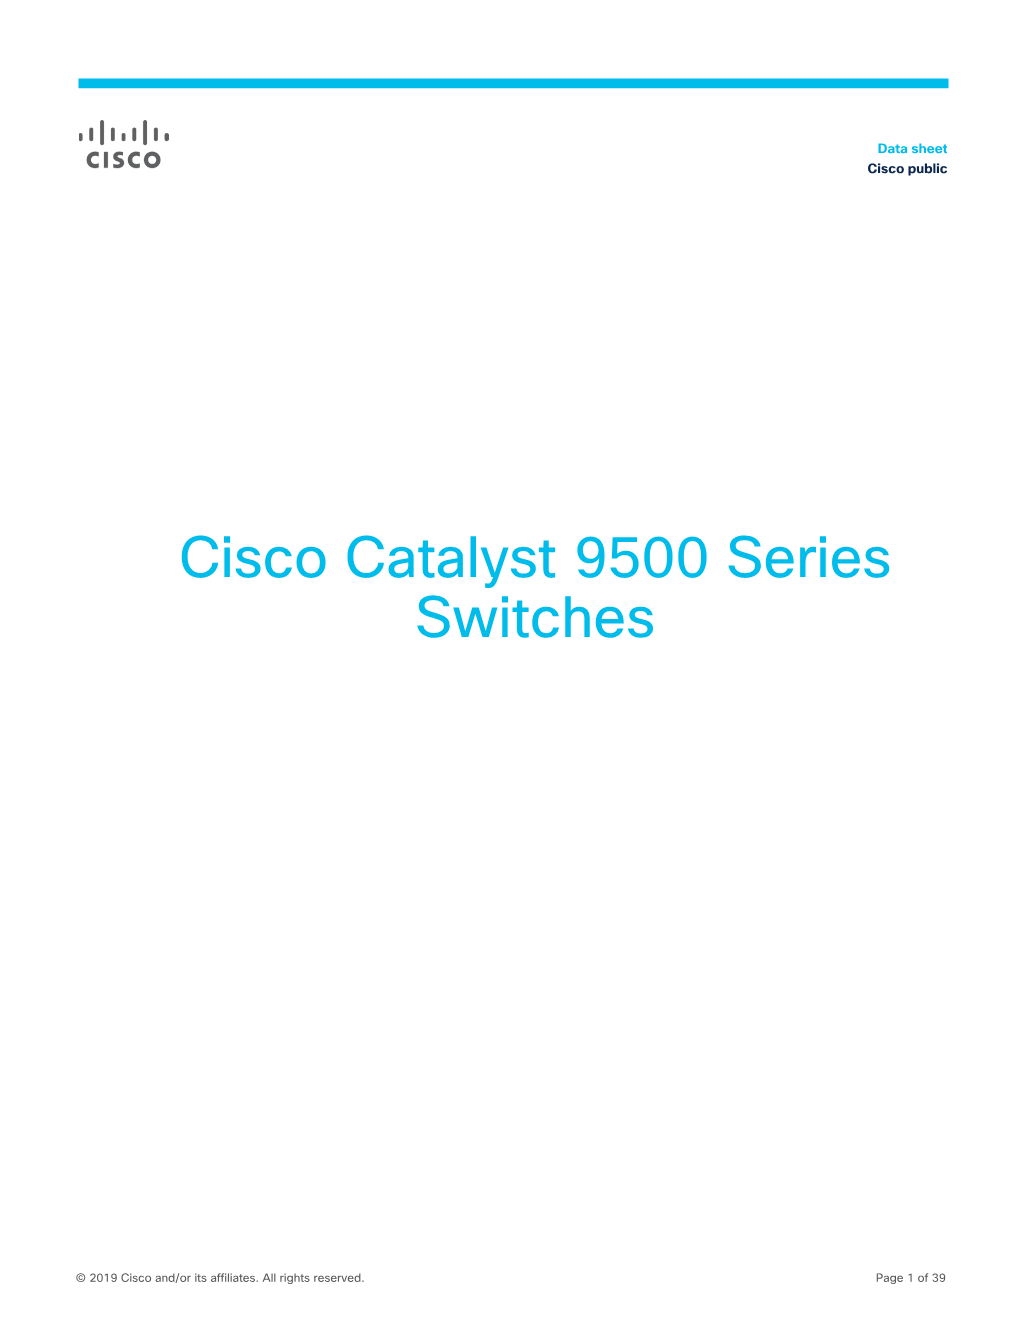 Cisco Catalyst 9500 Series Switches Data Sheet